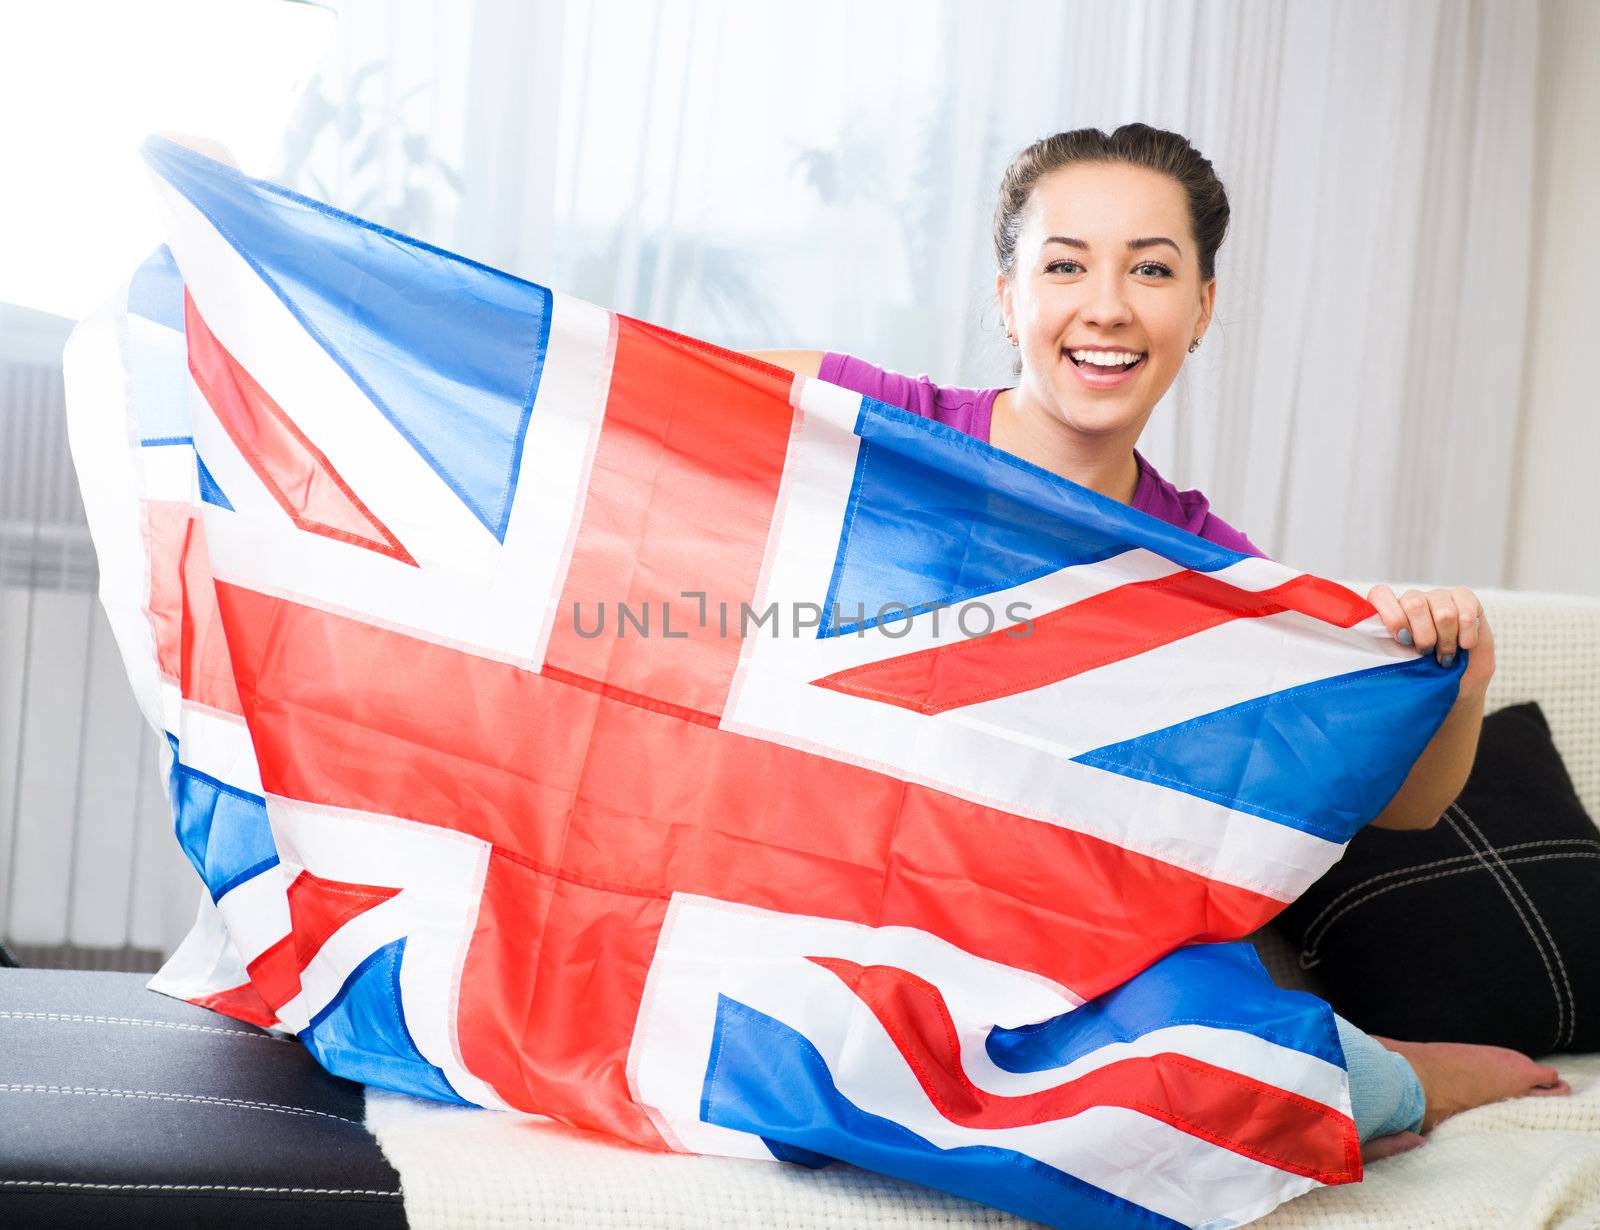 British woman holding the Jack Union flag